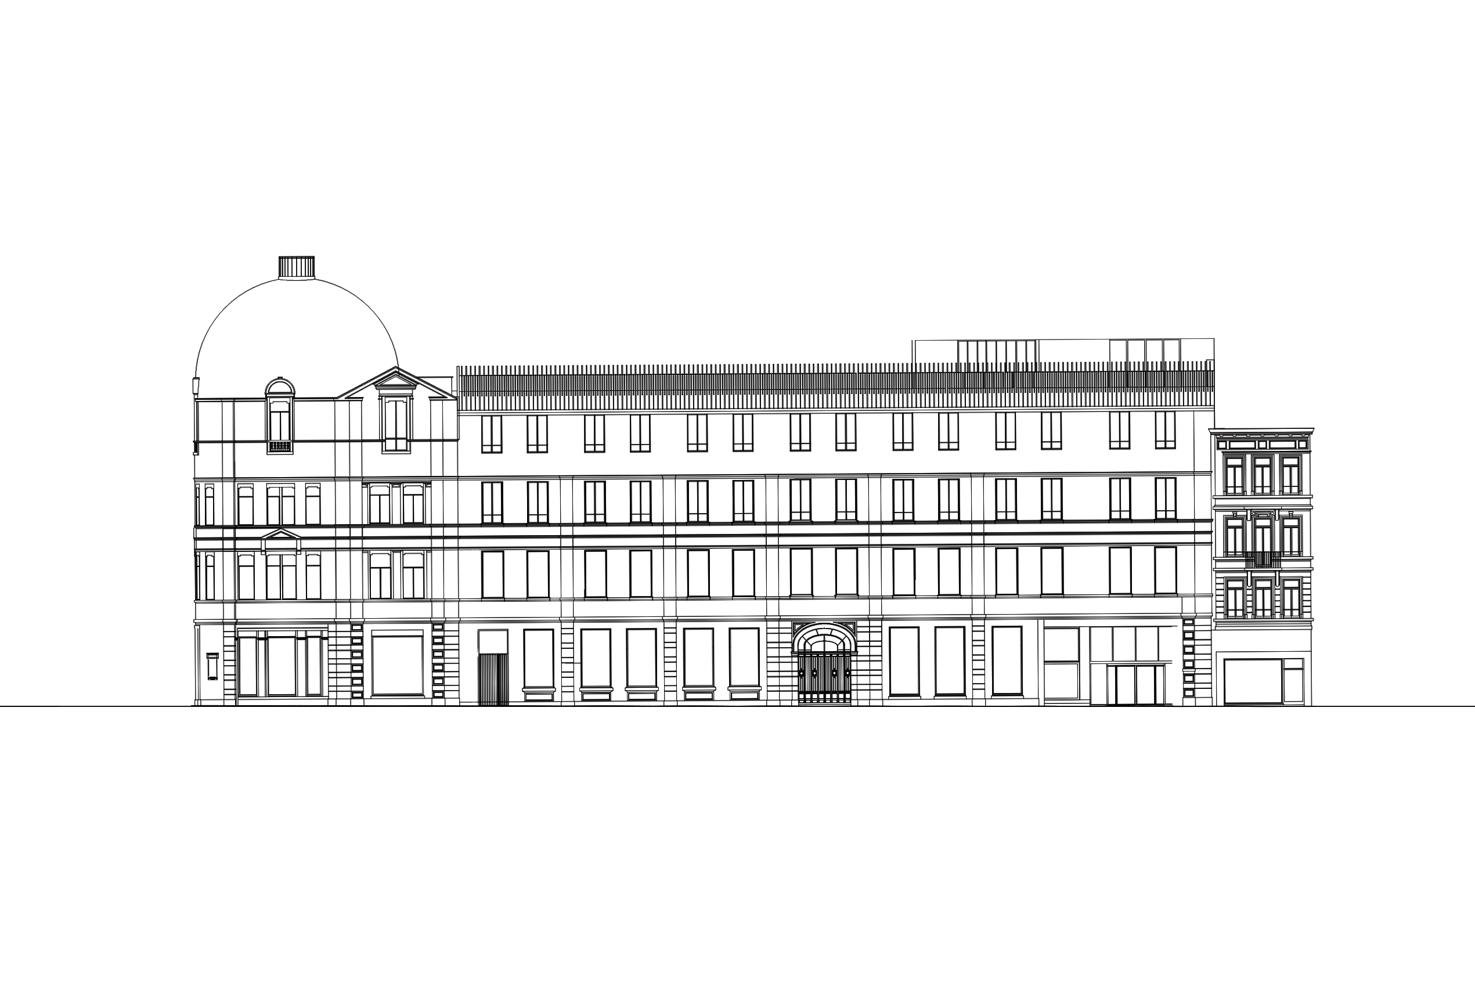 Aperçu façade MoMu Nationalestraat 2020, (c) B-architecten